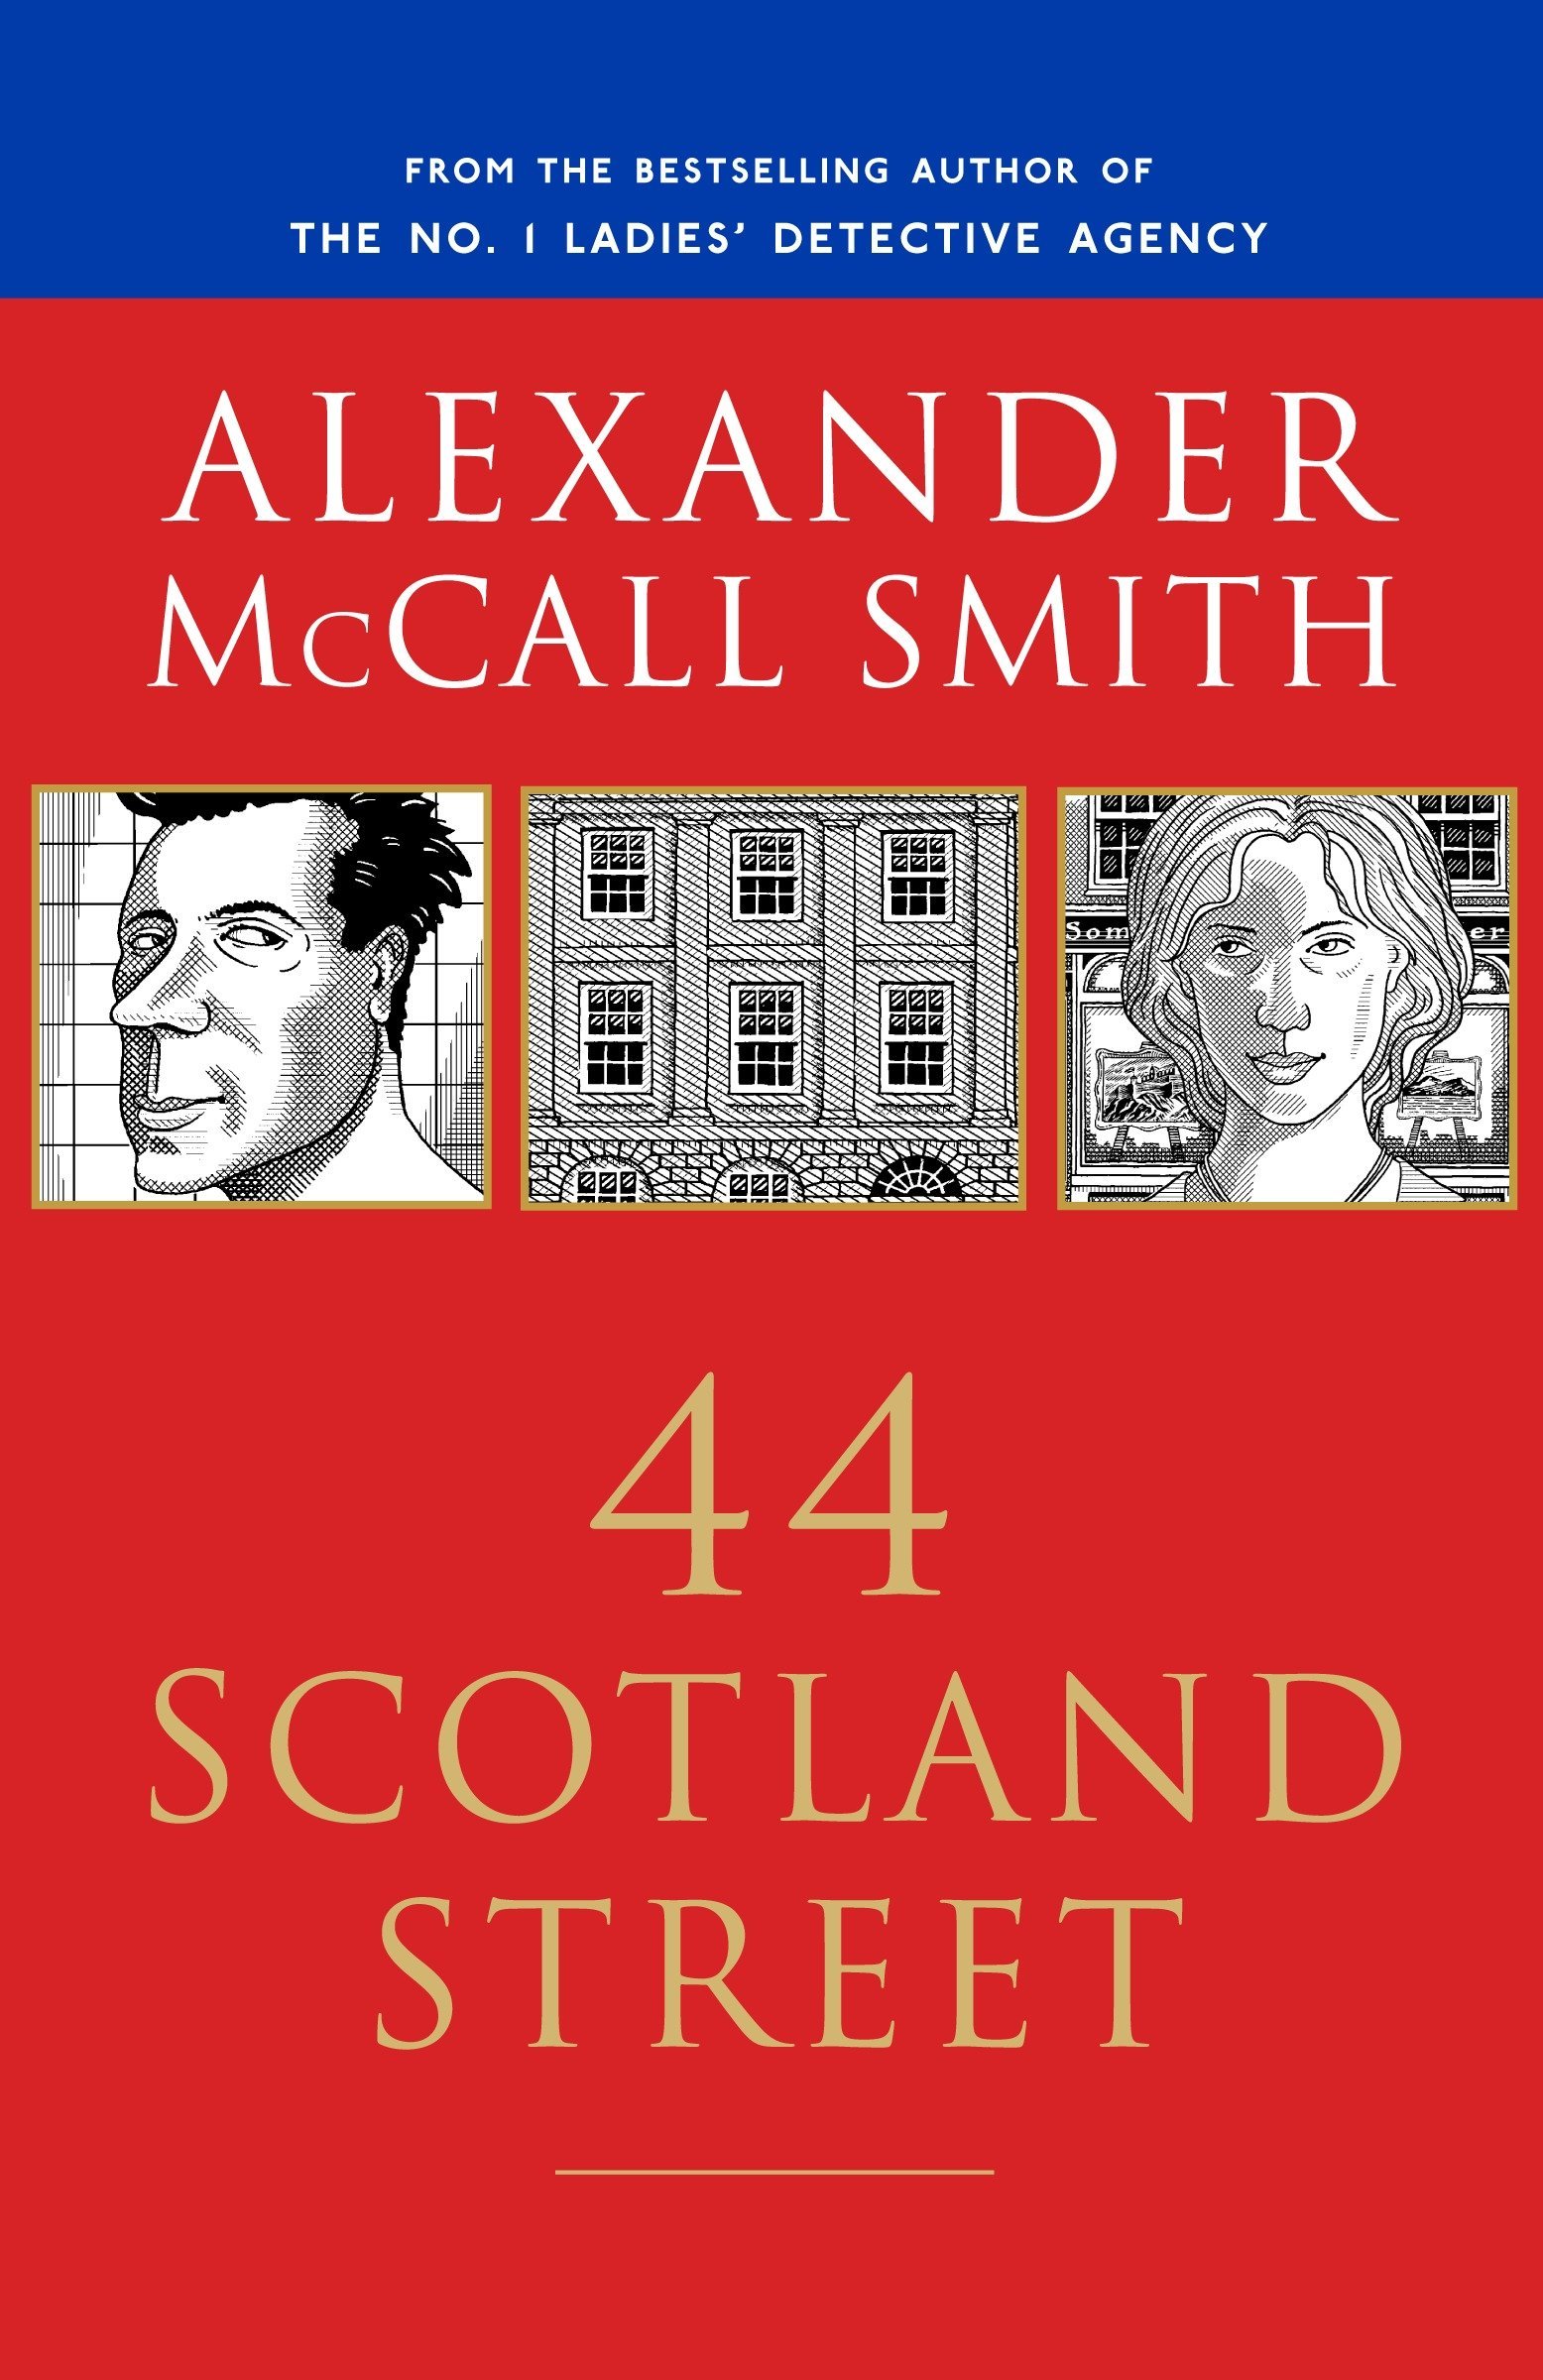 Book Cover 44 Scotland Street (44 Scotland Street Series, Book 1)